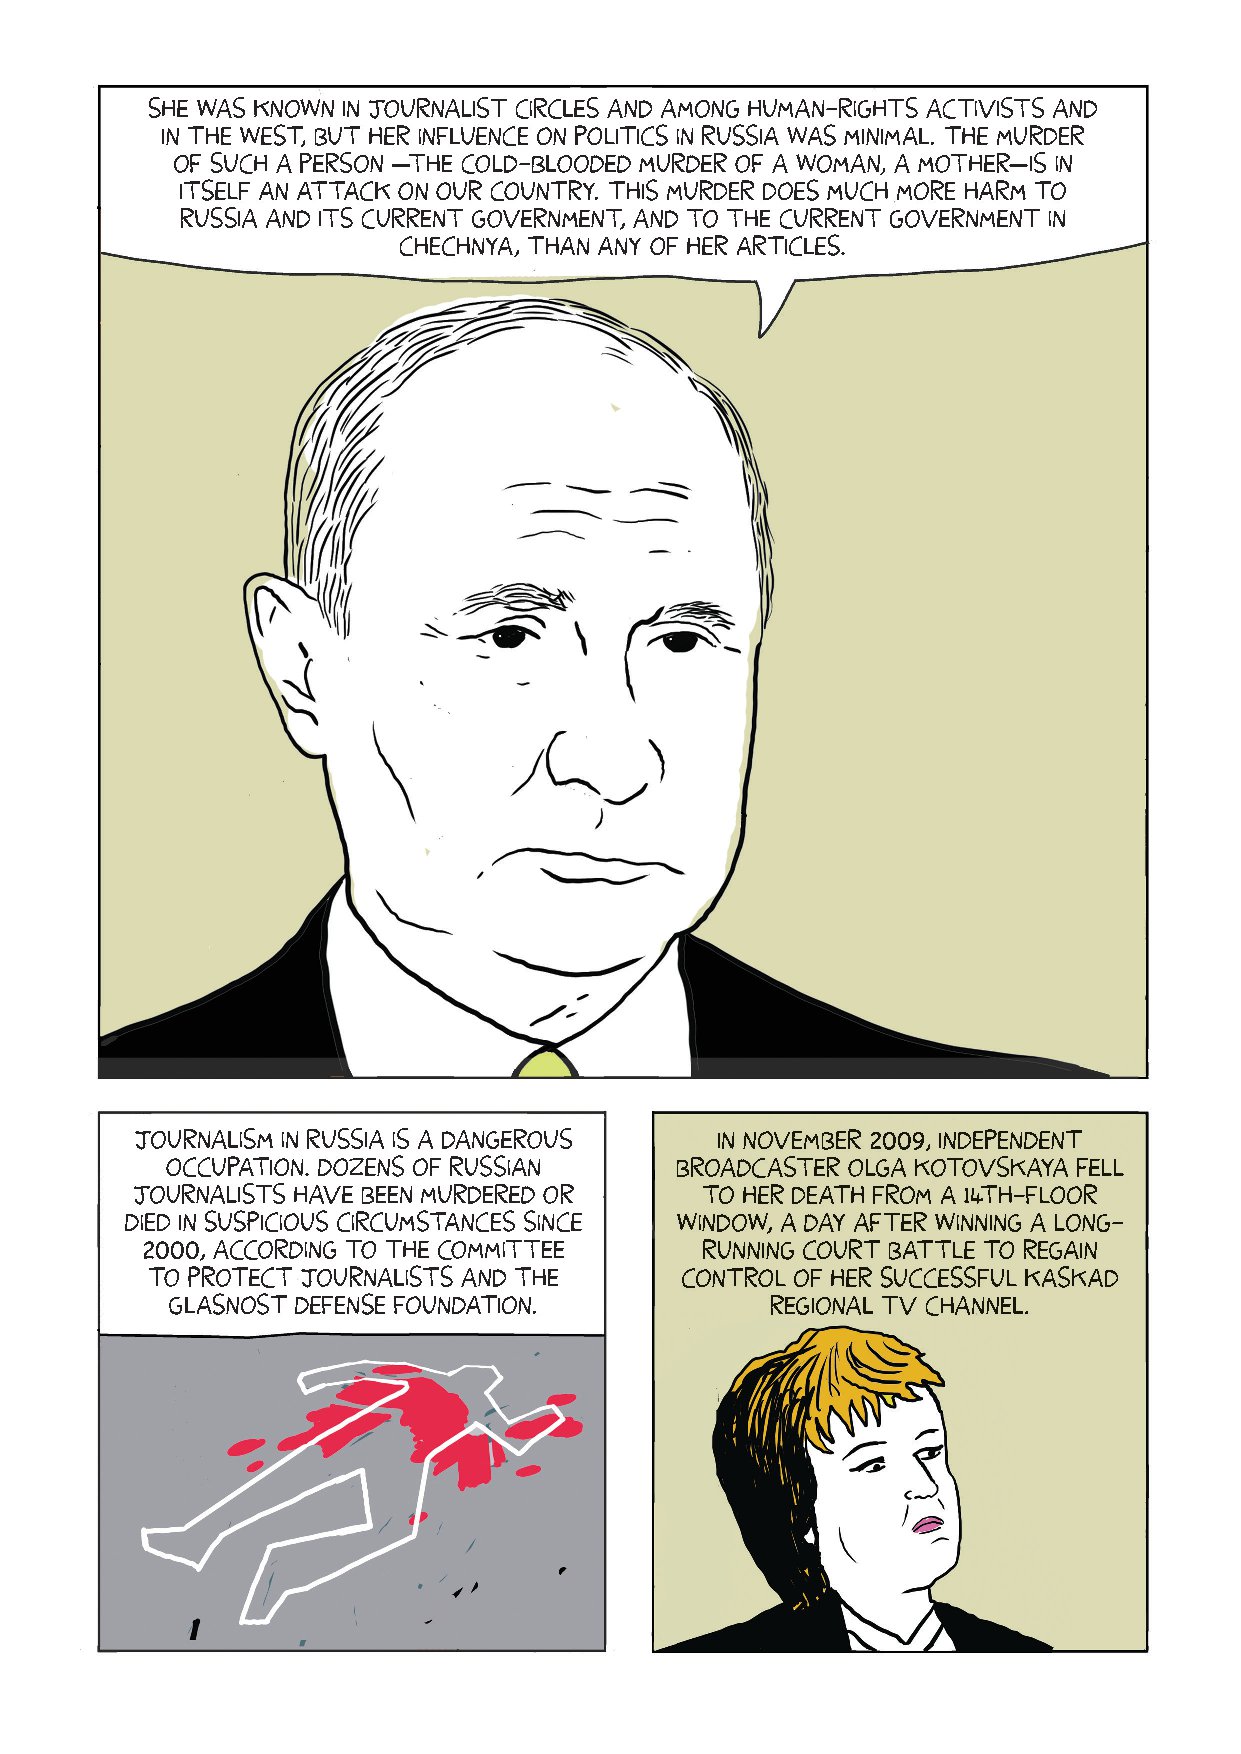 Putin's Russia